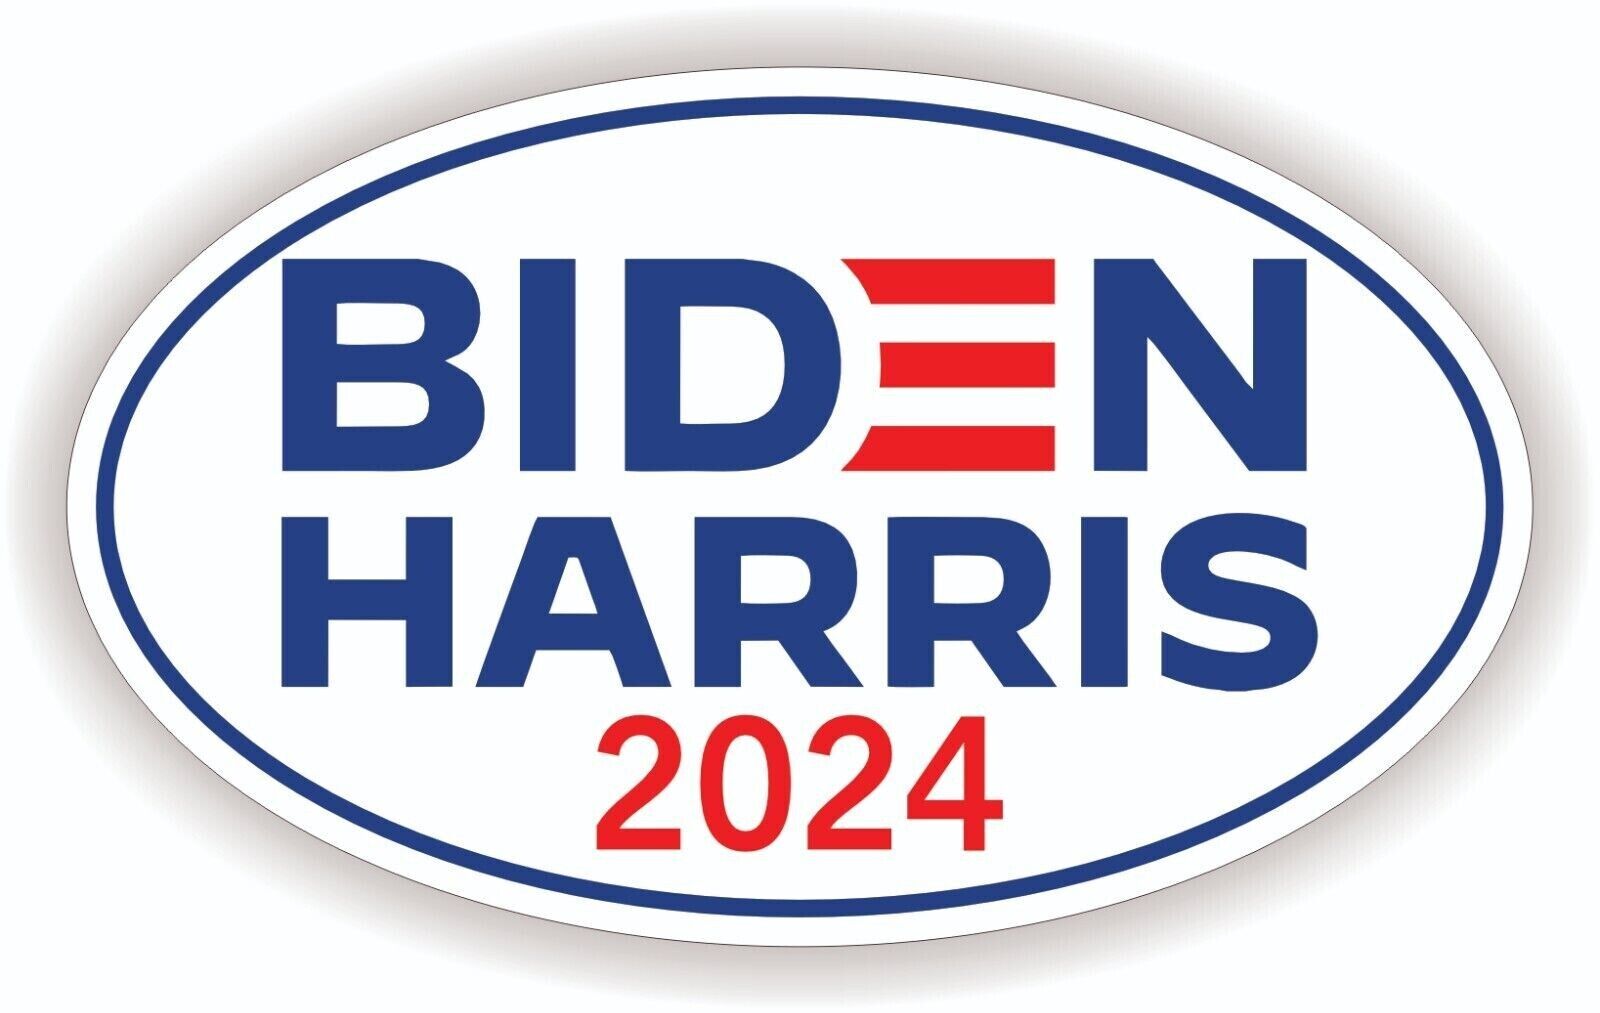 BIDEN Harris 2024 Oval Vinyl Bumper Sticker  Decal Election BONUS DECAL INCLUDED